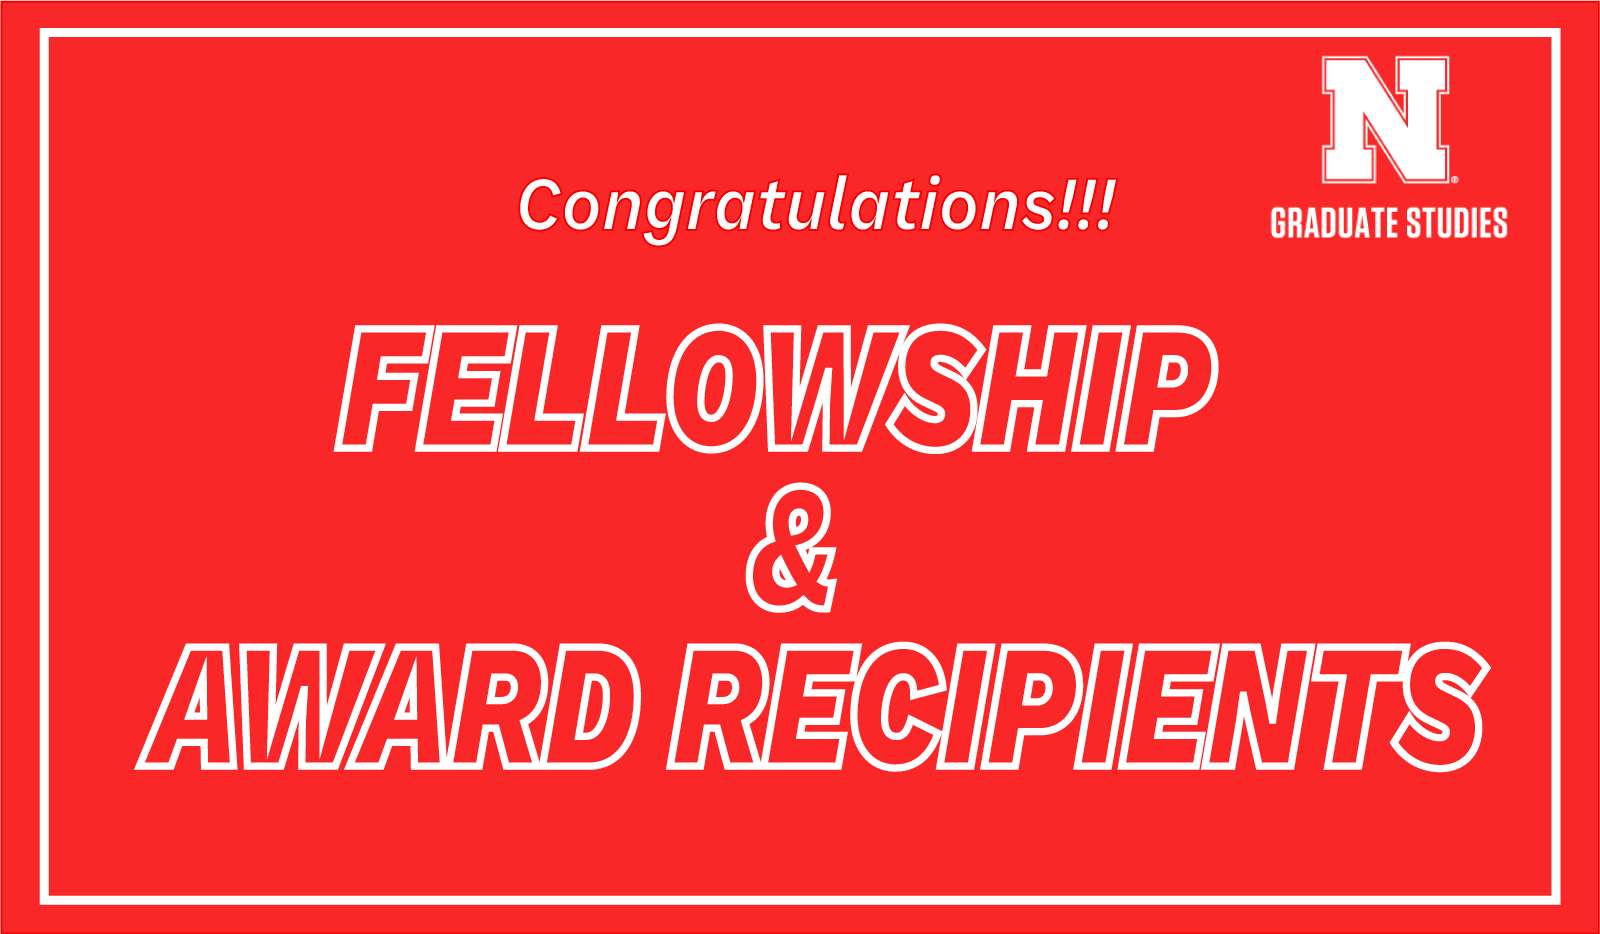 Congratulations to Fellowship and Awards Recipients